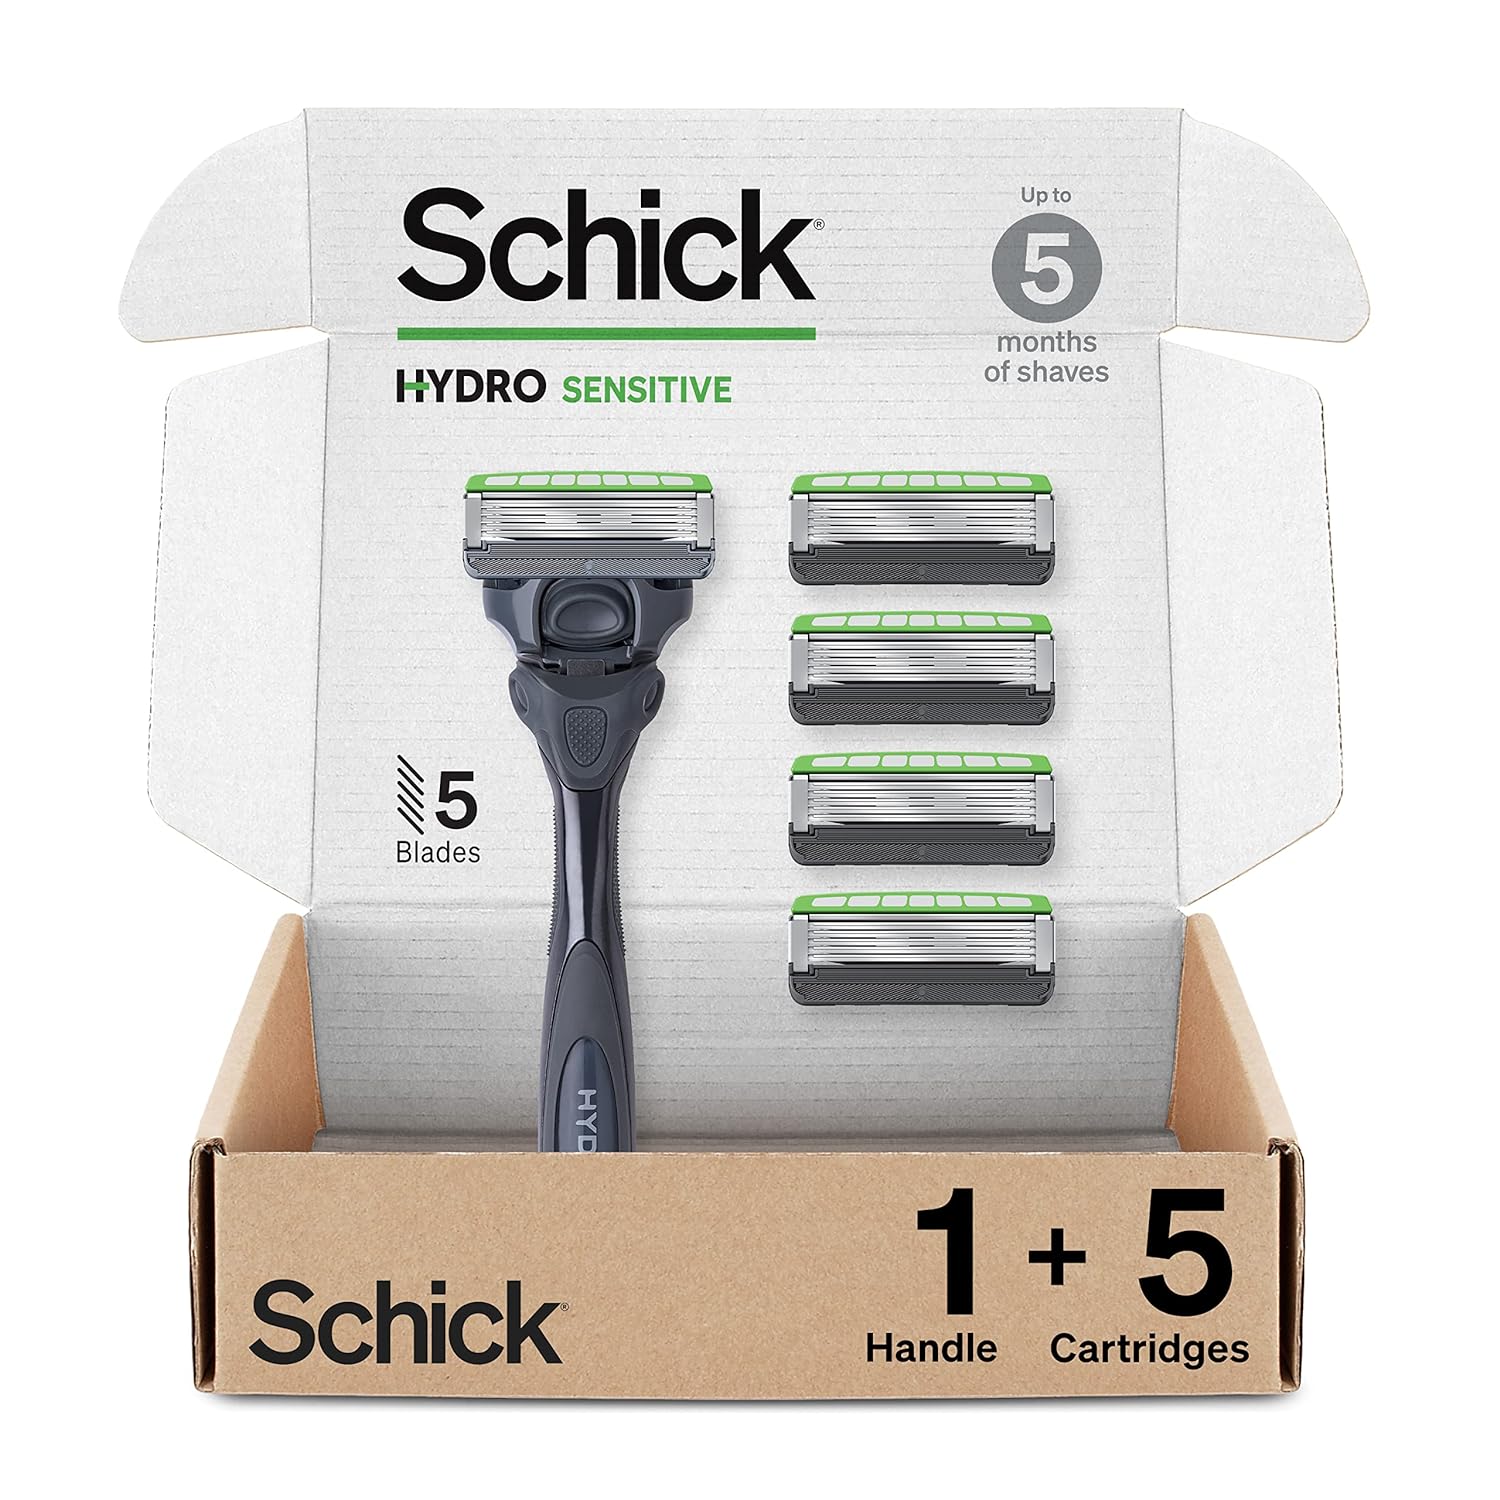 Schick Hydro Sensitive Razor — for Men with Sensitive Skin with 5 Razor Blades